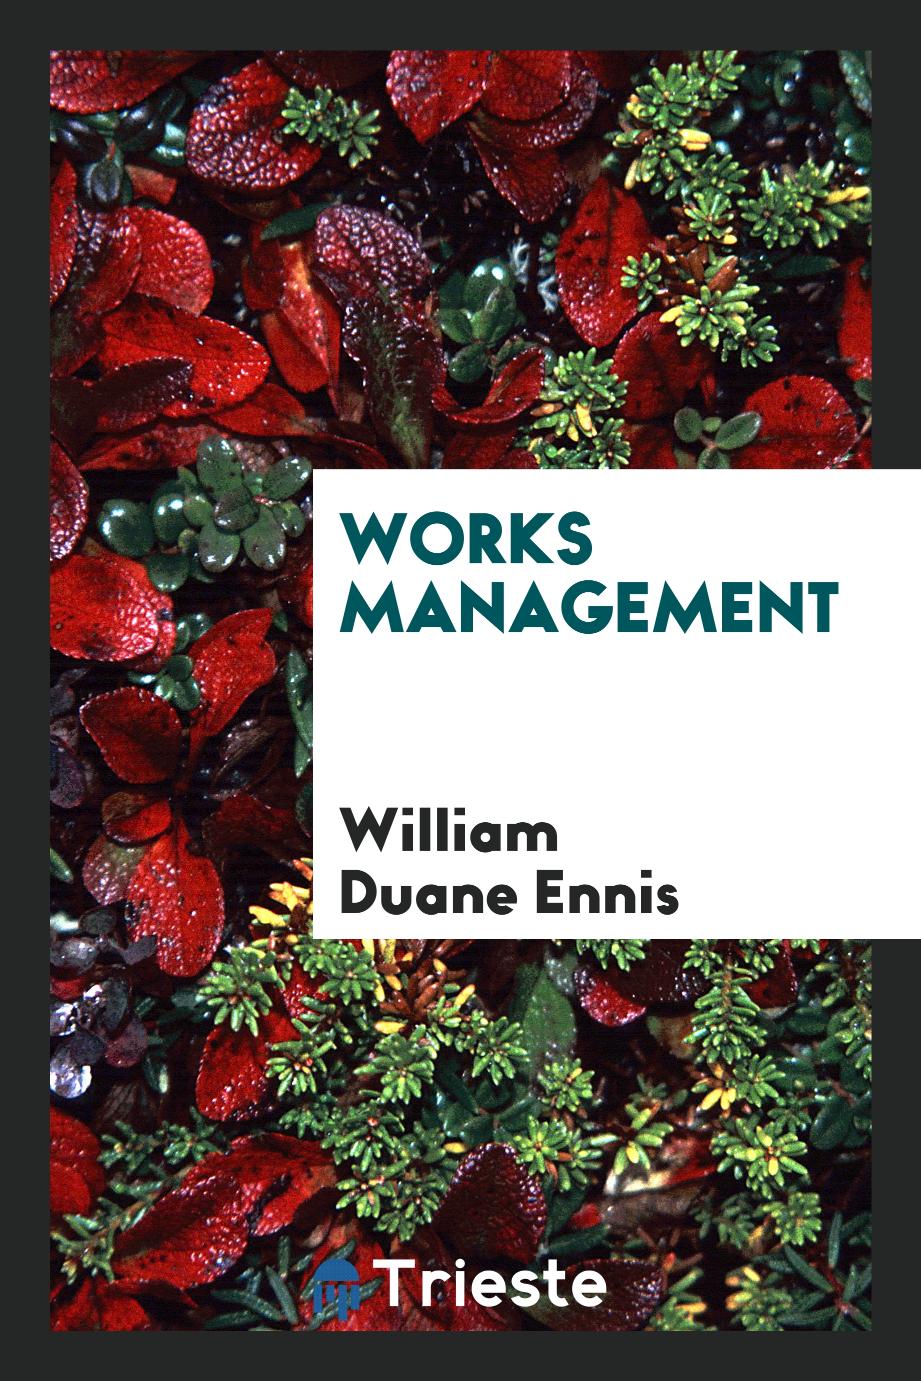 Works management